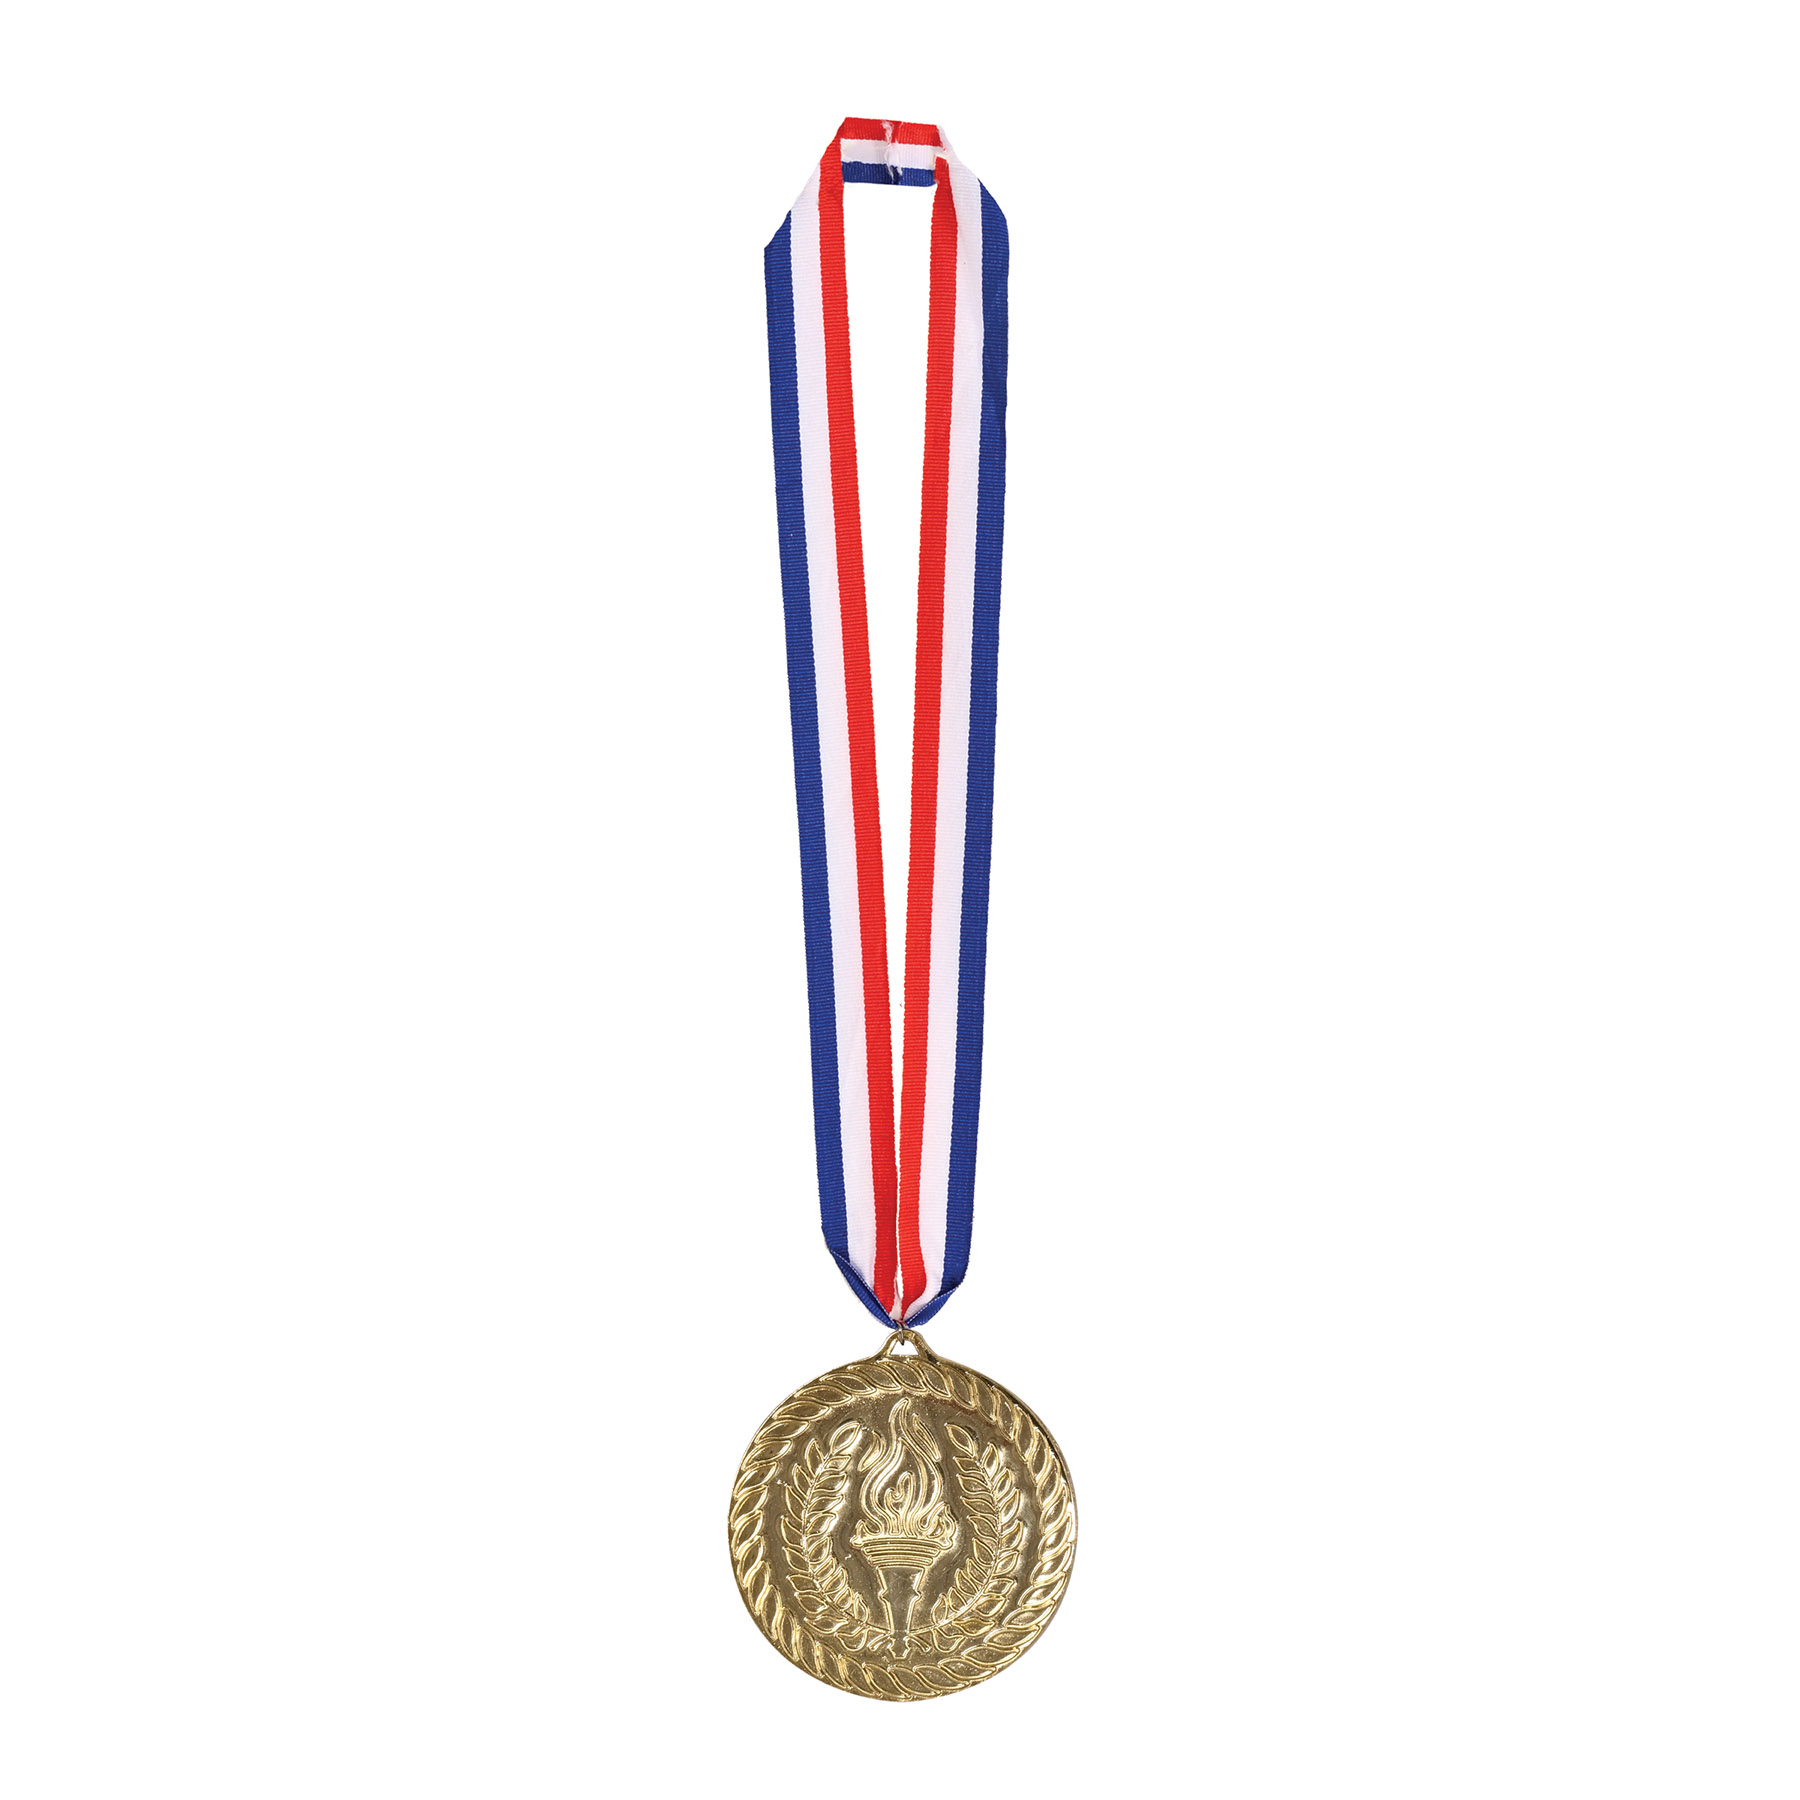 GOLD Medal w/Ribbon